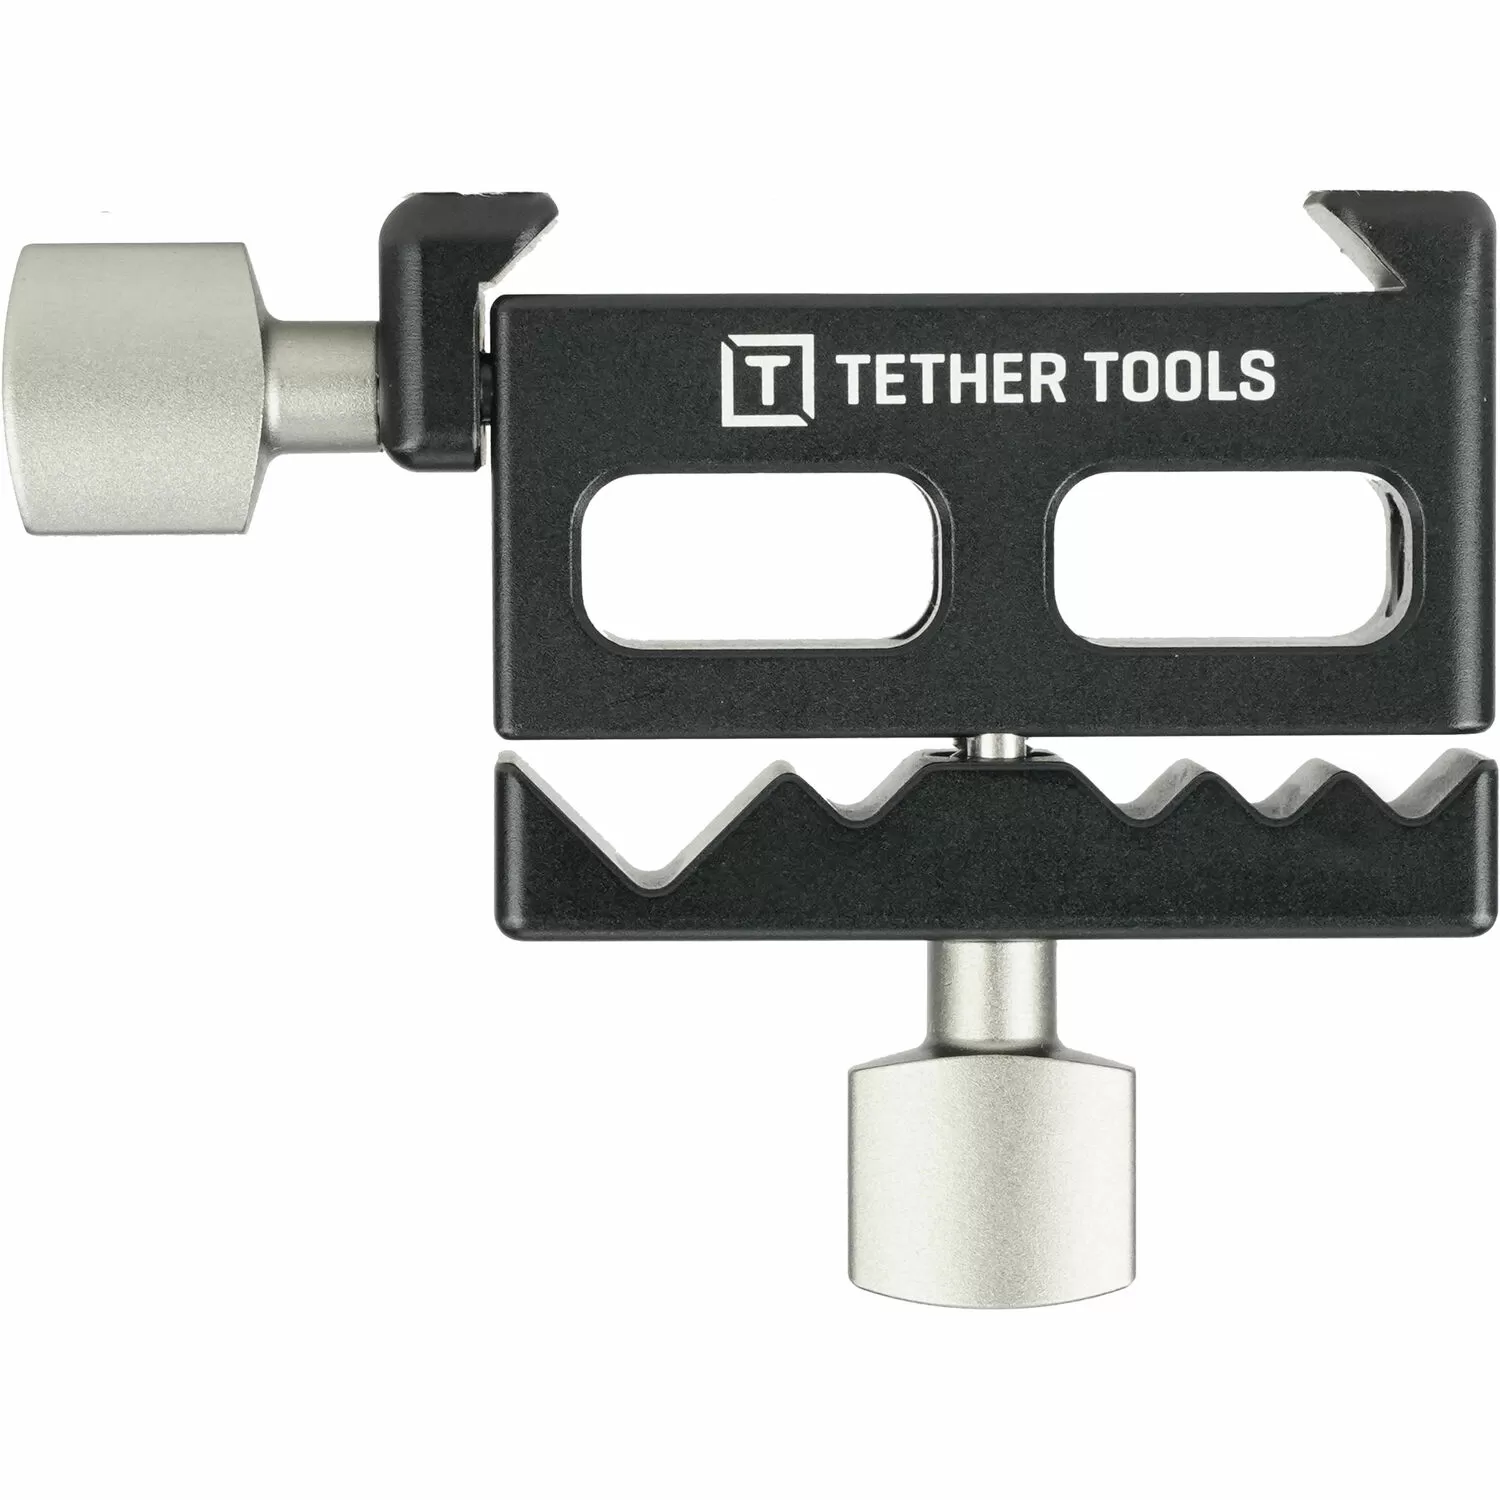 Tether tools. Держатель кабеля Tether Tools TETHERGUARD Camera support [tg020].